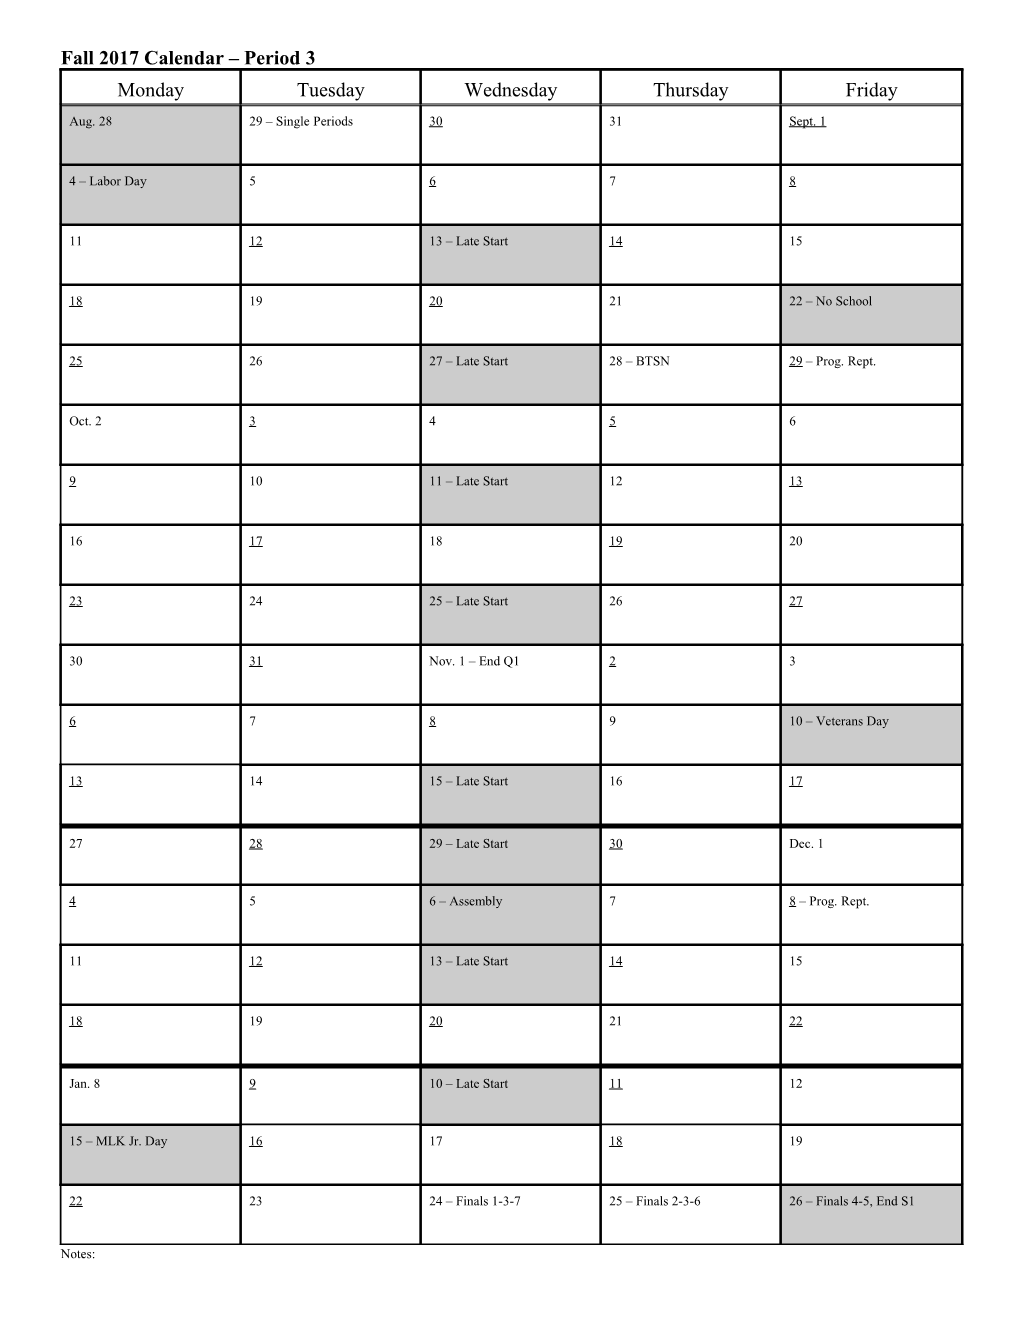 Fall 2006 - Calendar - Periods 1-3-5